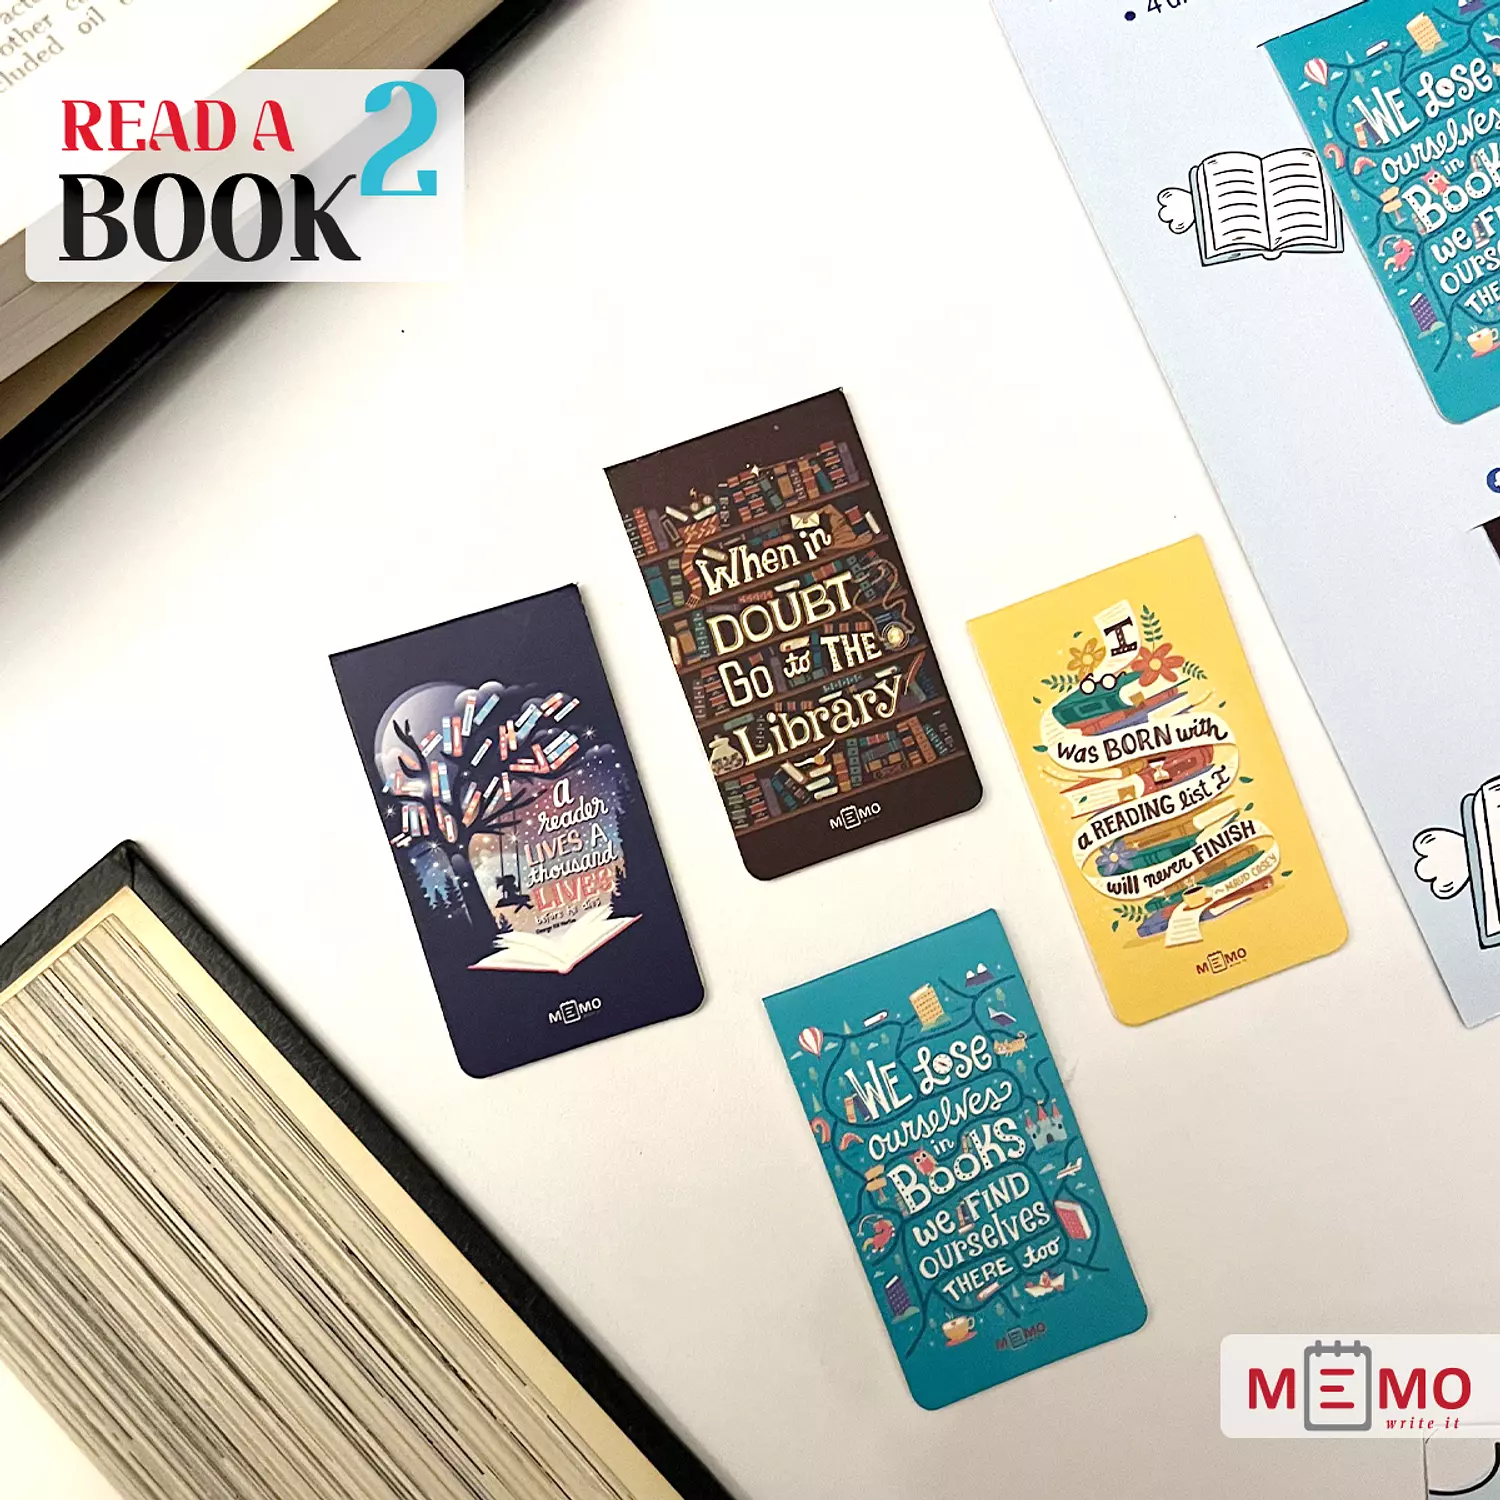 Memo Read a book 2 Magnetic Bookmarks (4 pcs) 7